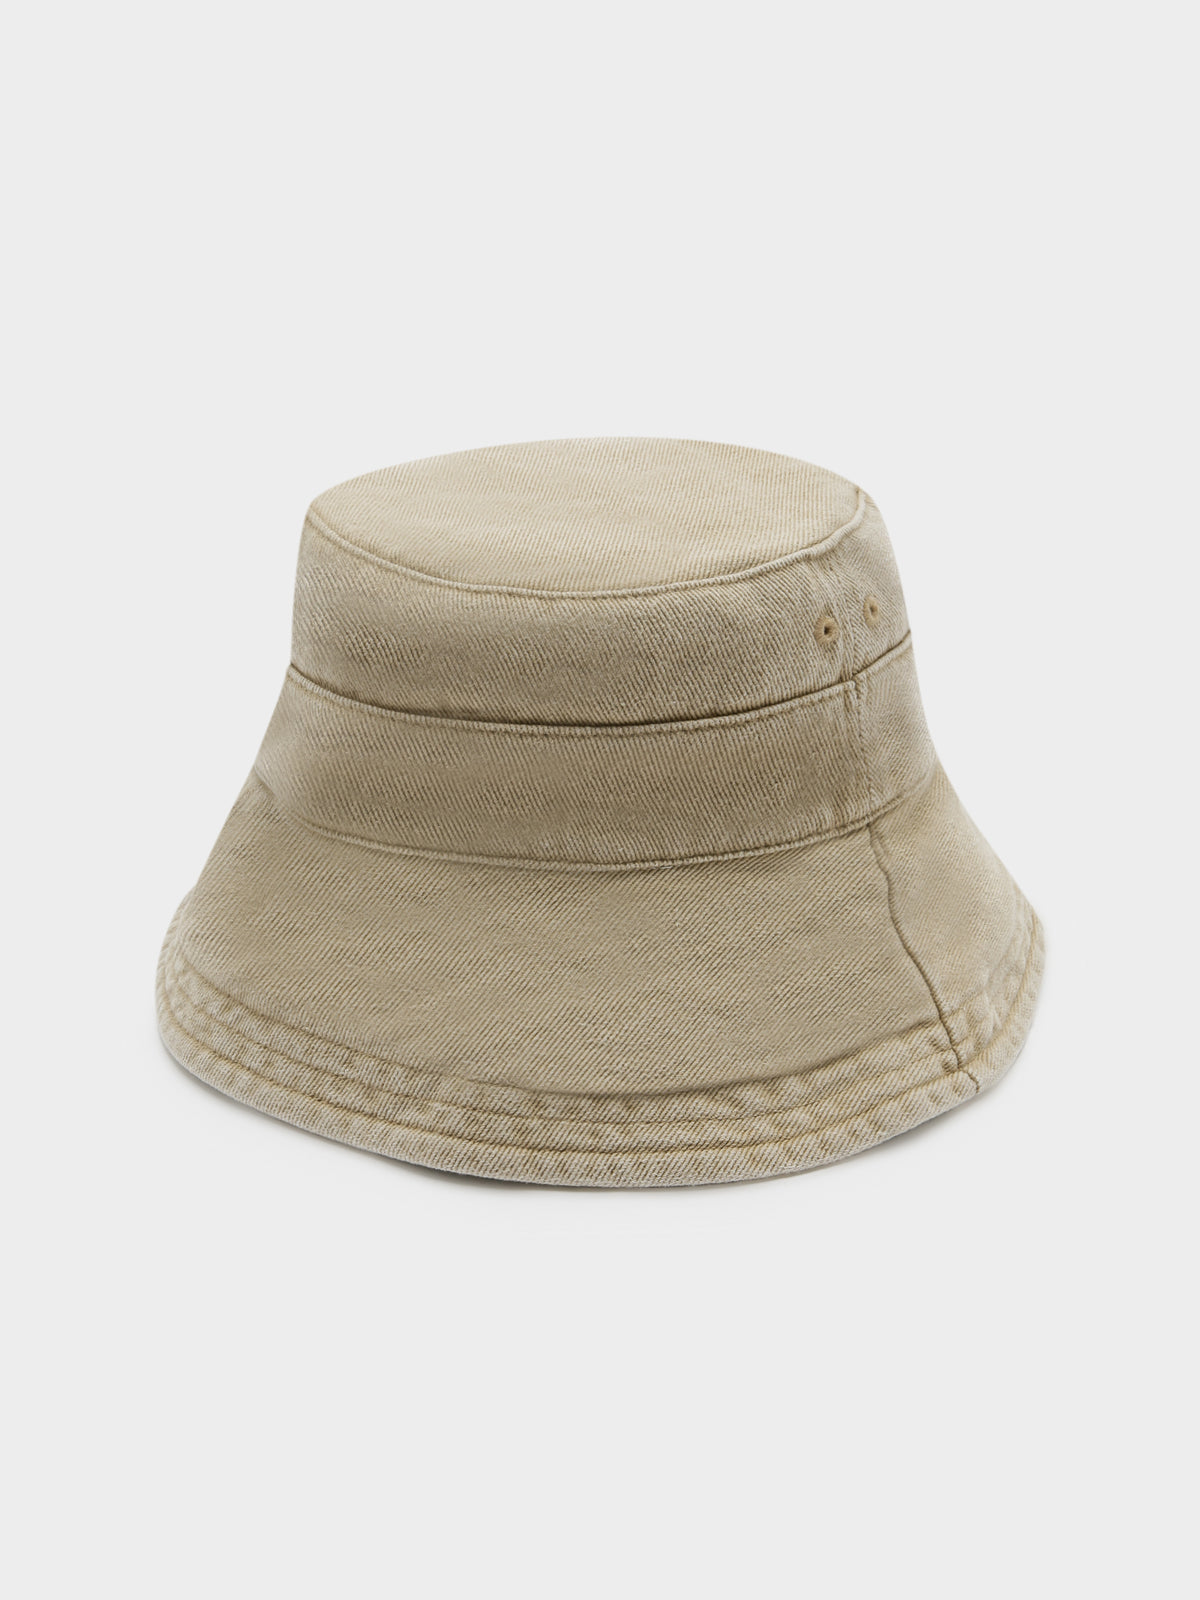 Reversible Sun Hat in Latte Beige &amp; White